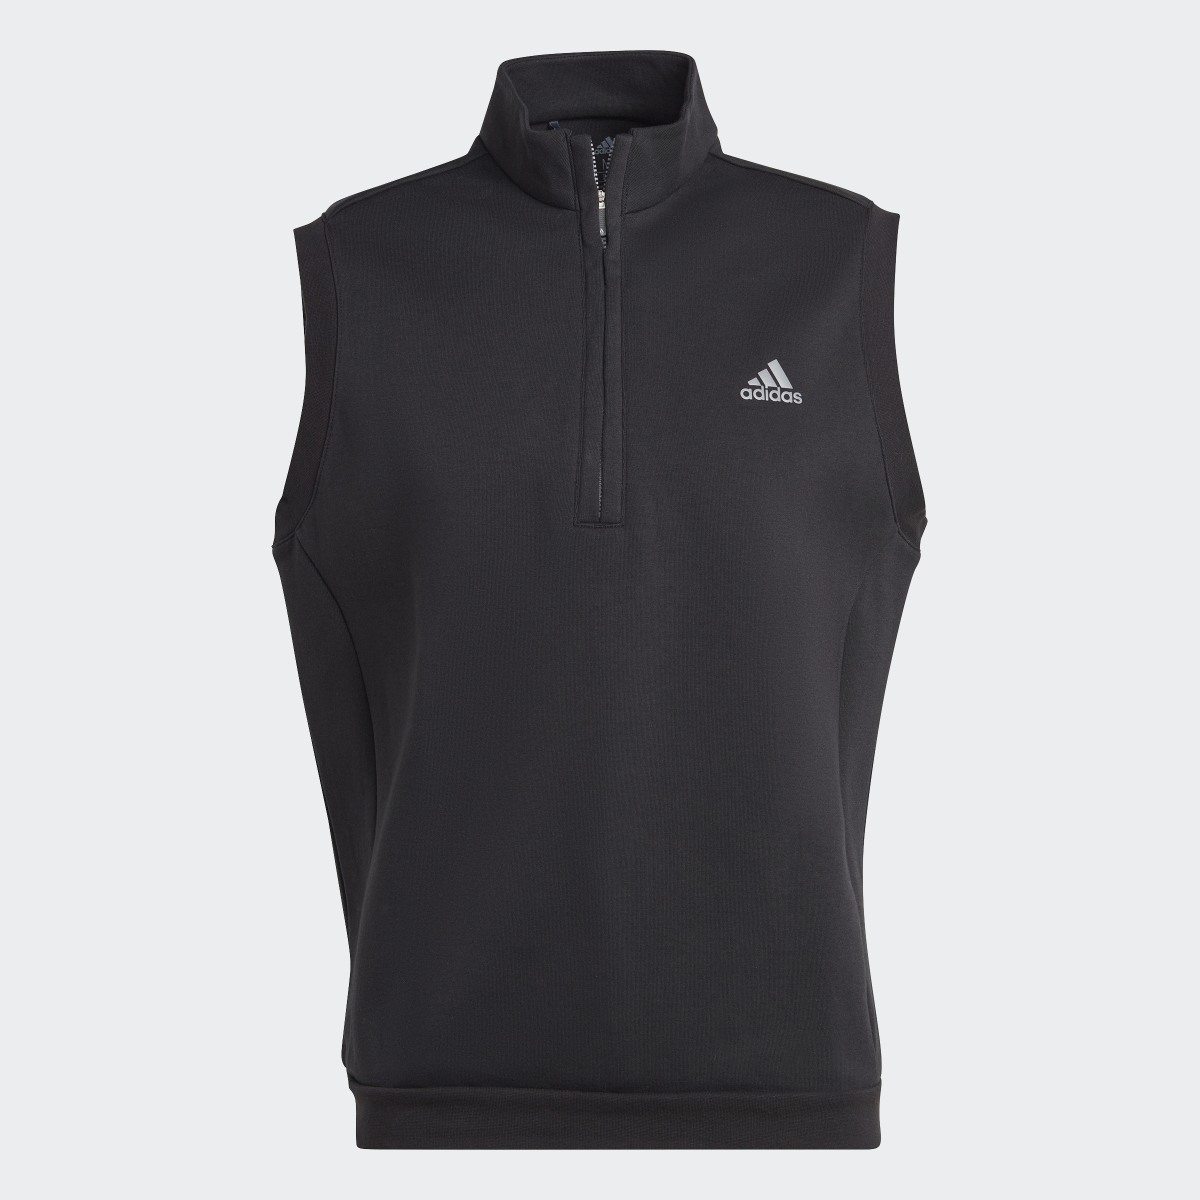 Adidas Authentic 1/4-Zip Vest. 5